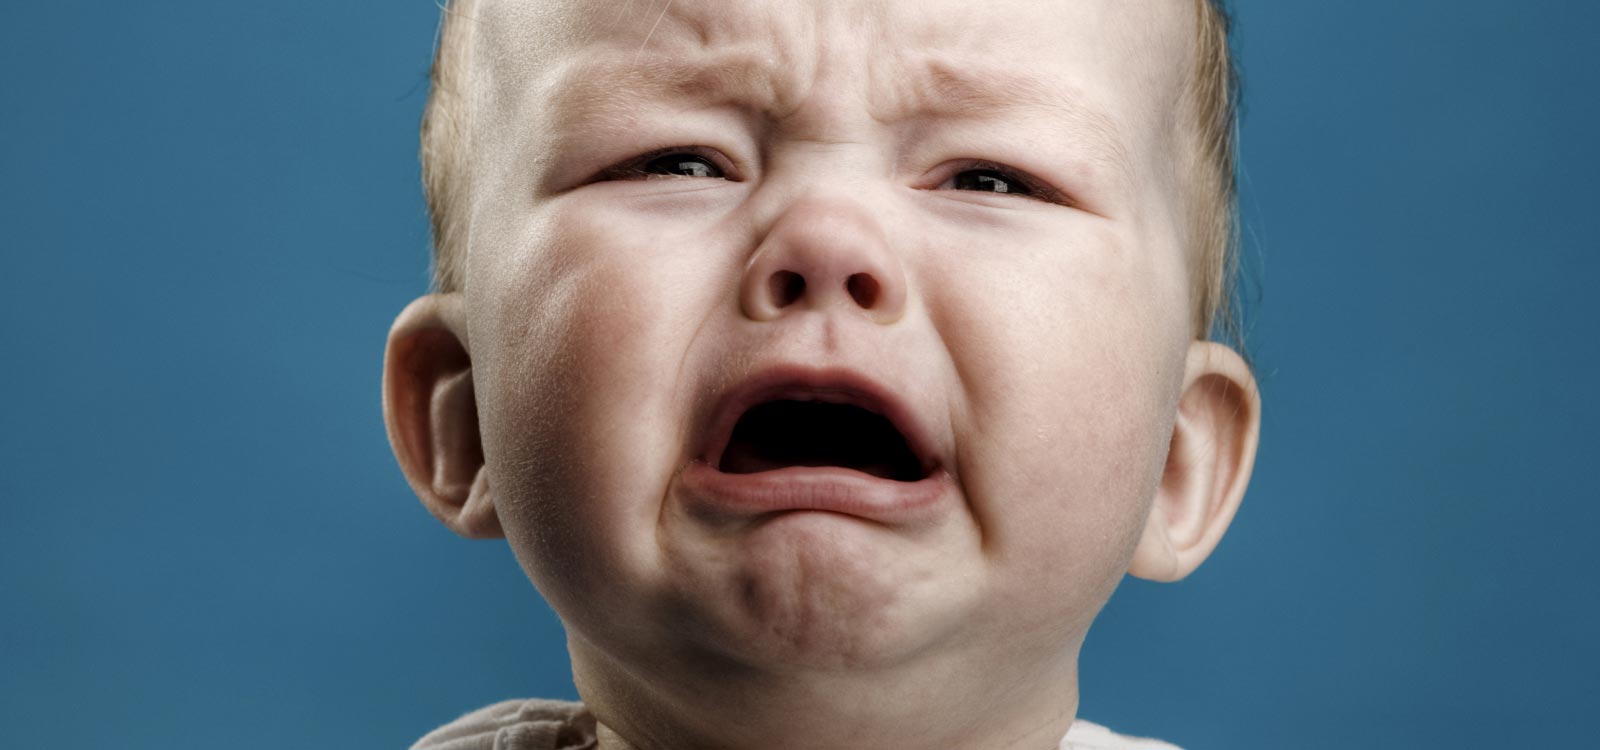 crying baby sad face